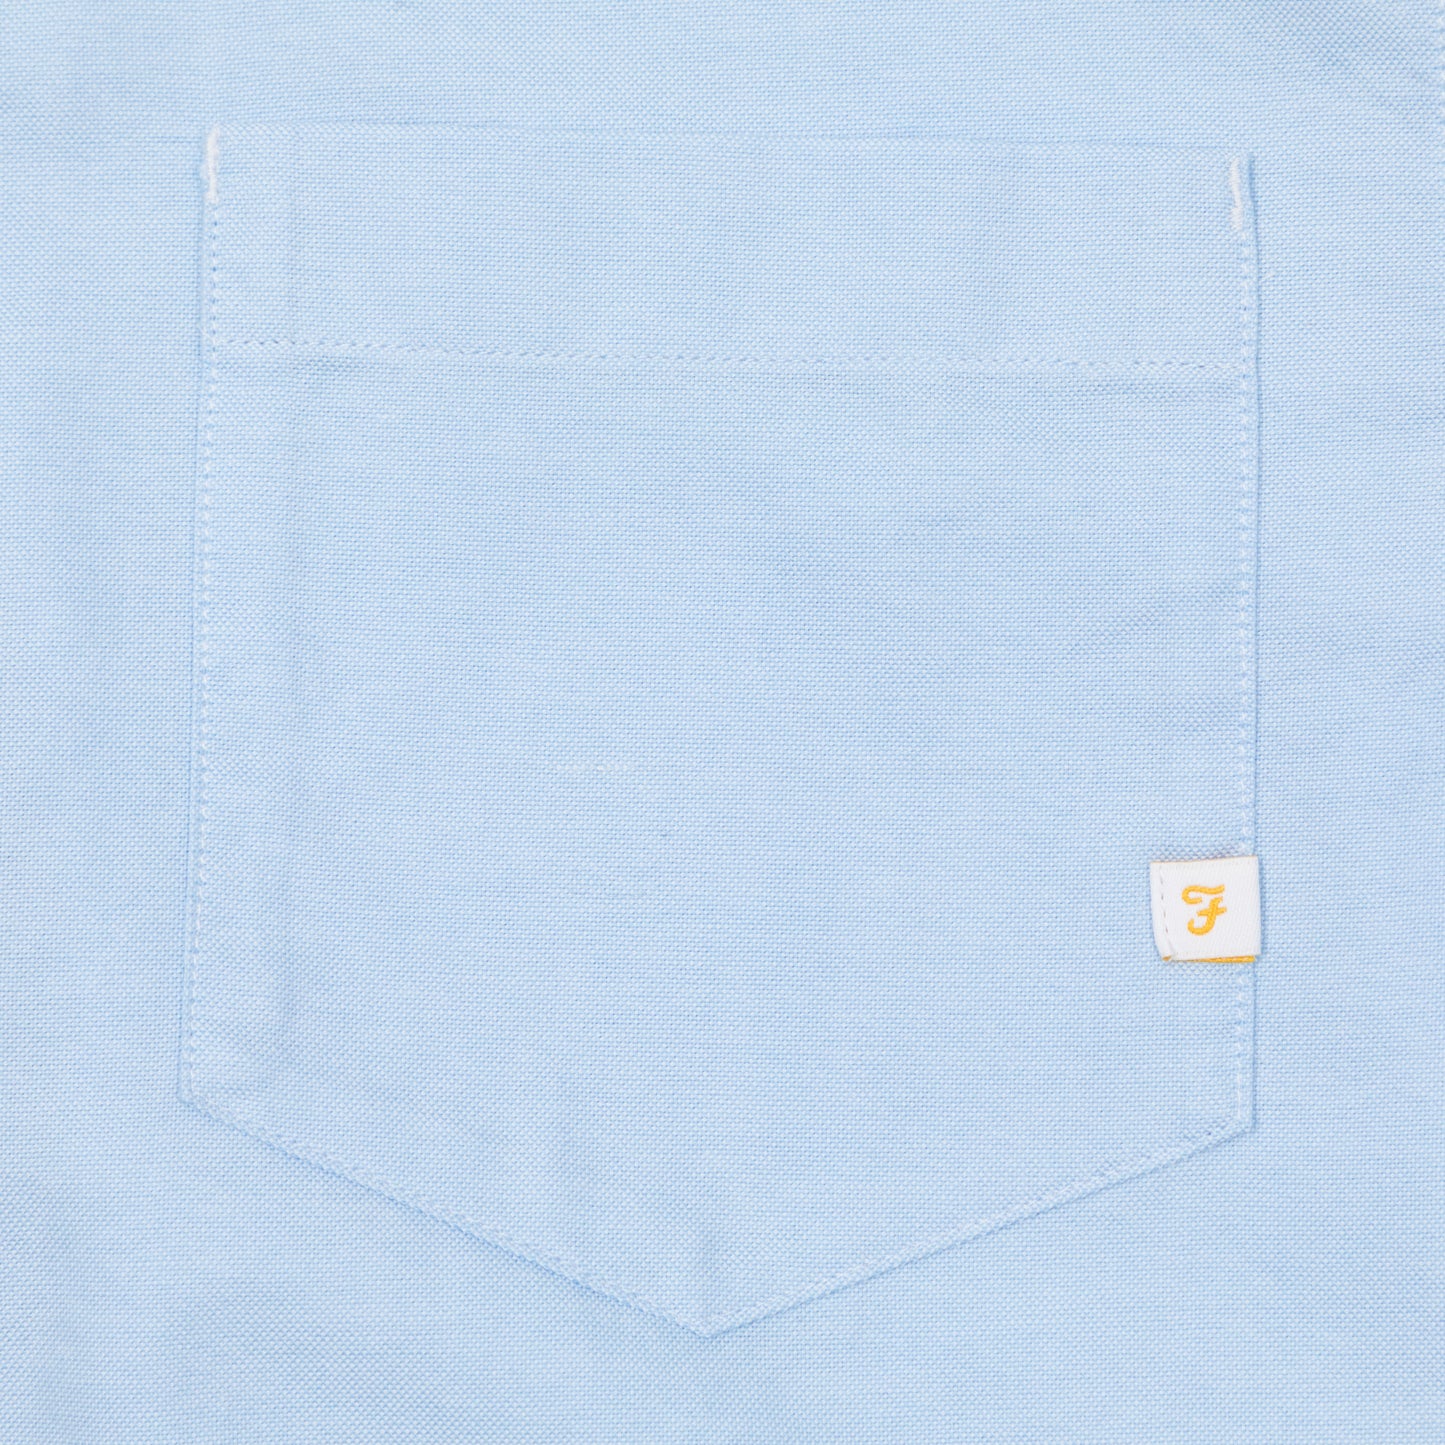 FARAH Brewer Pocket Long Sleeve Oxford Shirt in LIGHT BLUE